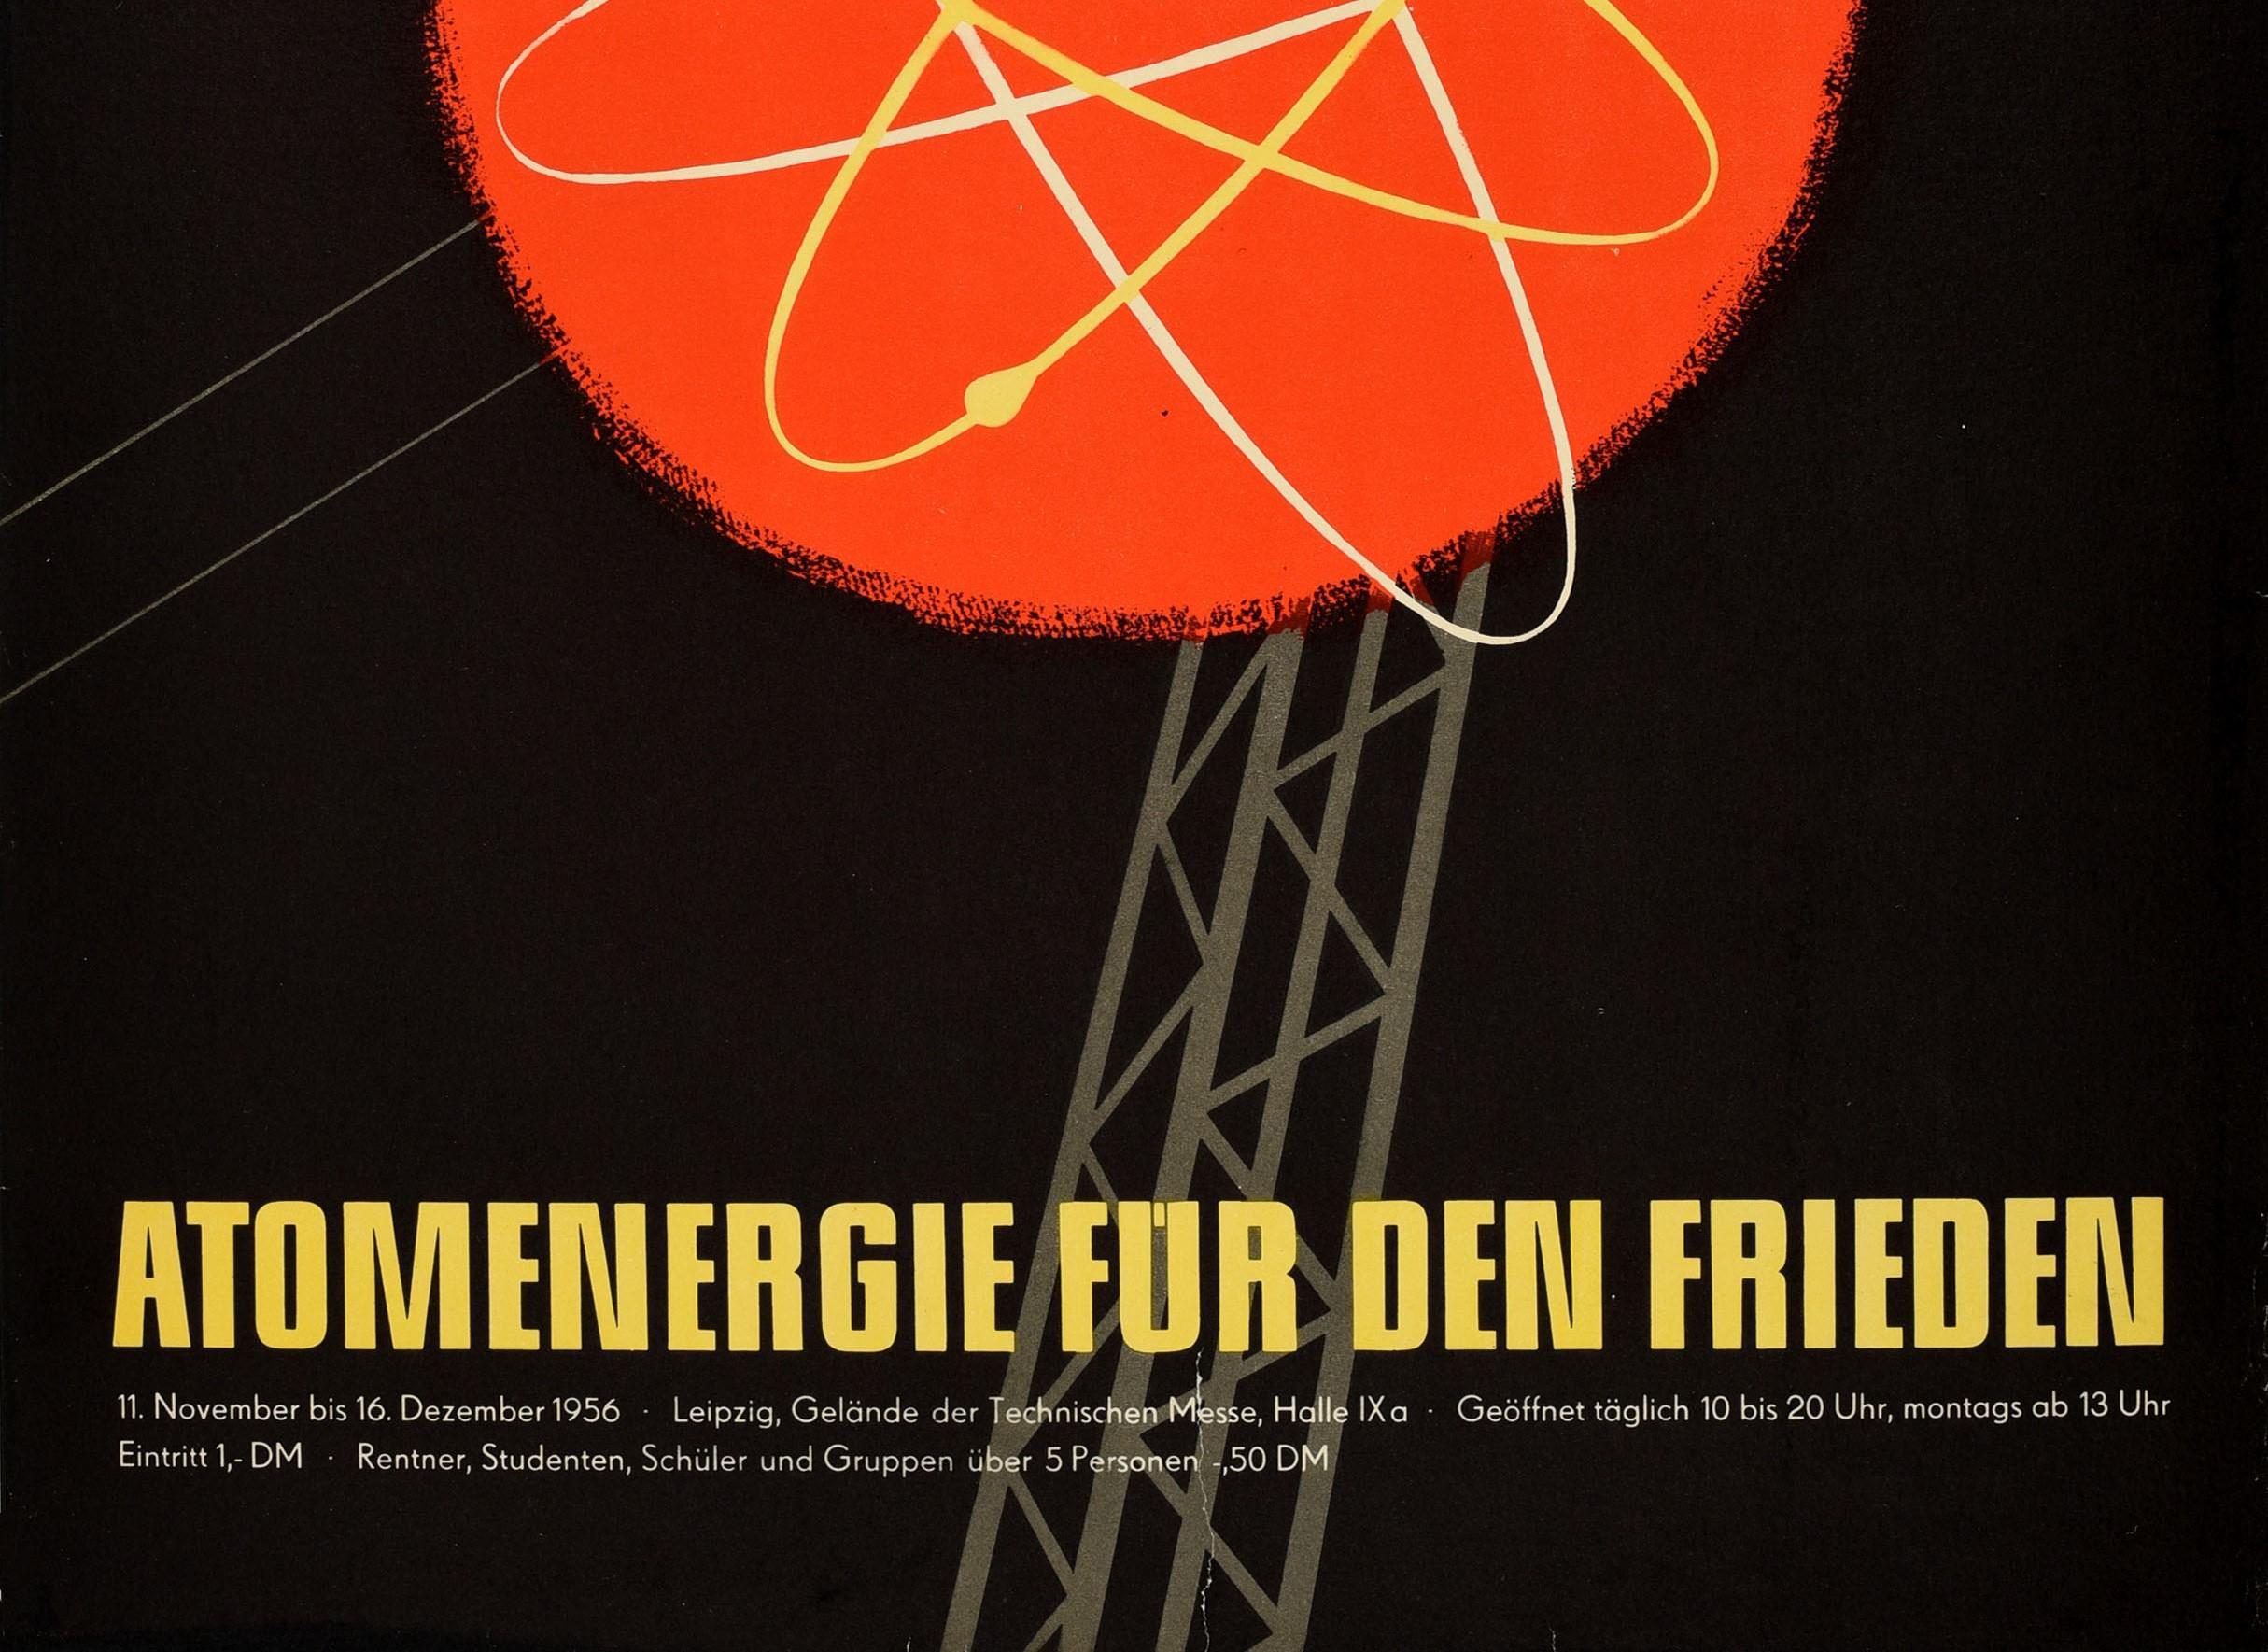 German Original Vintage Poster Atomic Energy For Peace USSR Exhibition Leipzig Fair